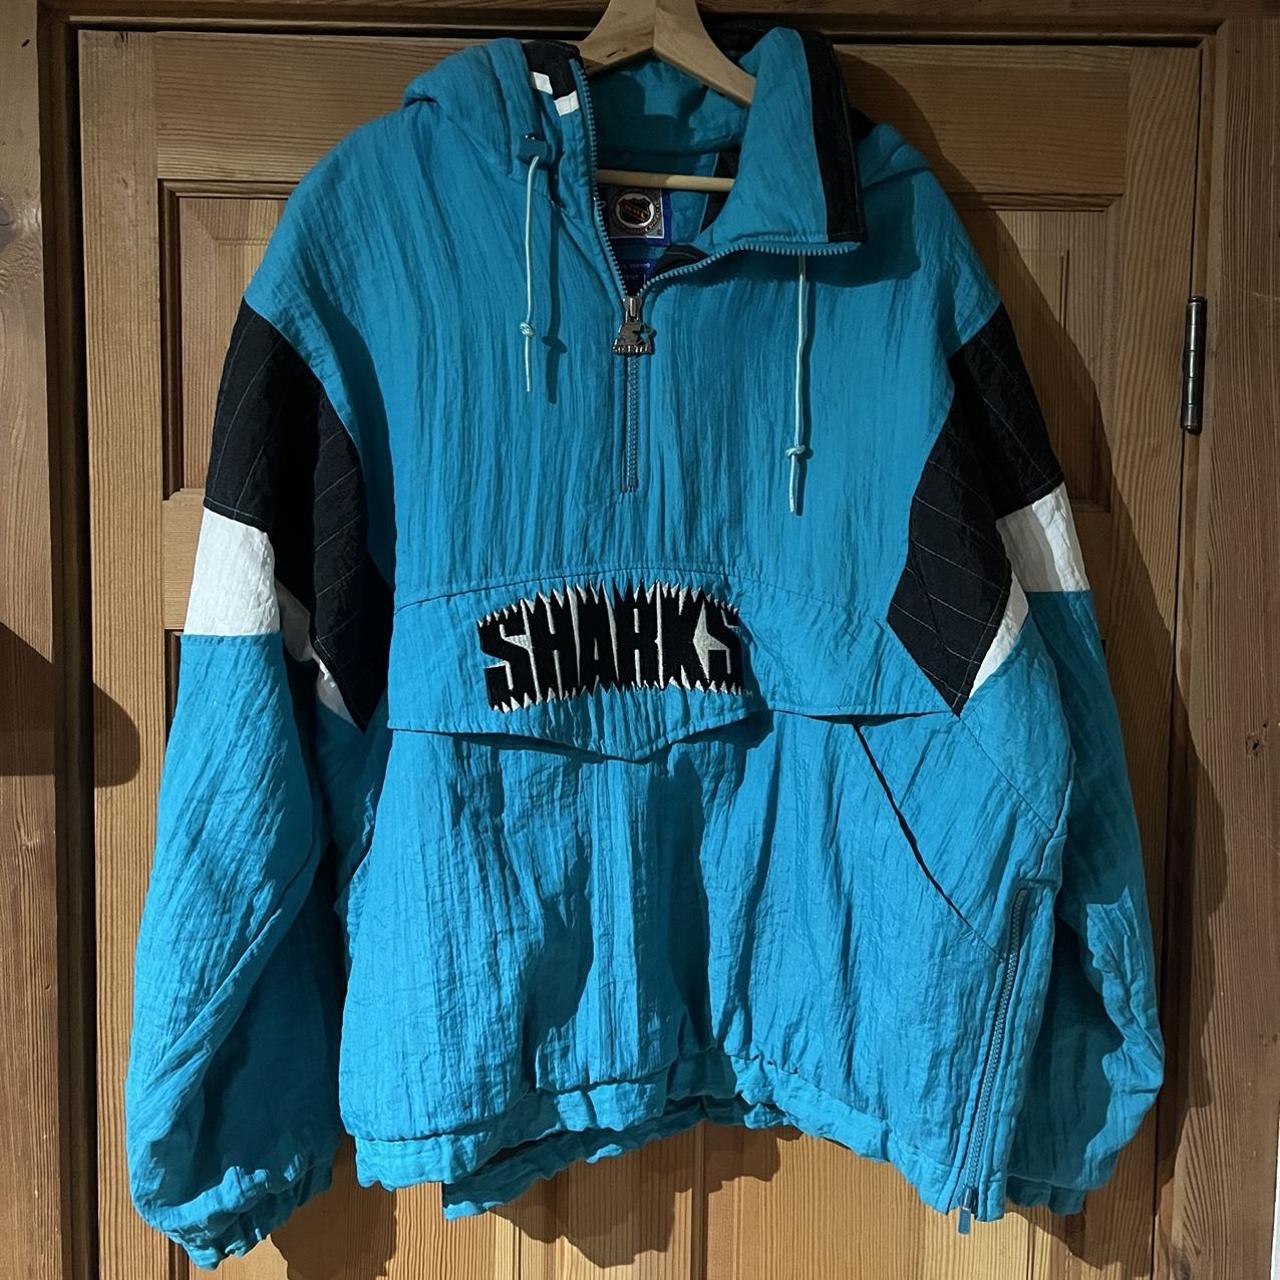 Official san Jose Sharks Starter Arch City Team T-Shirts, hoodie